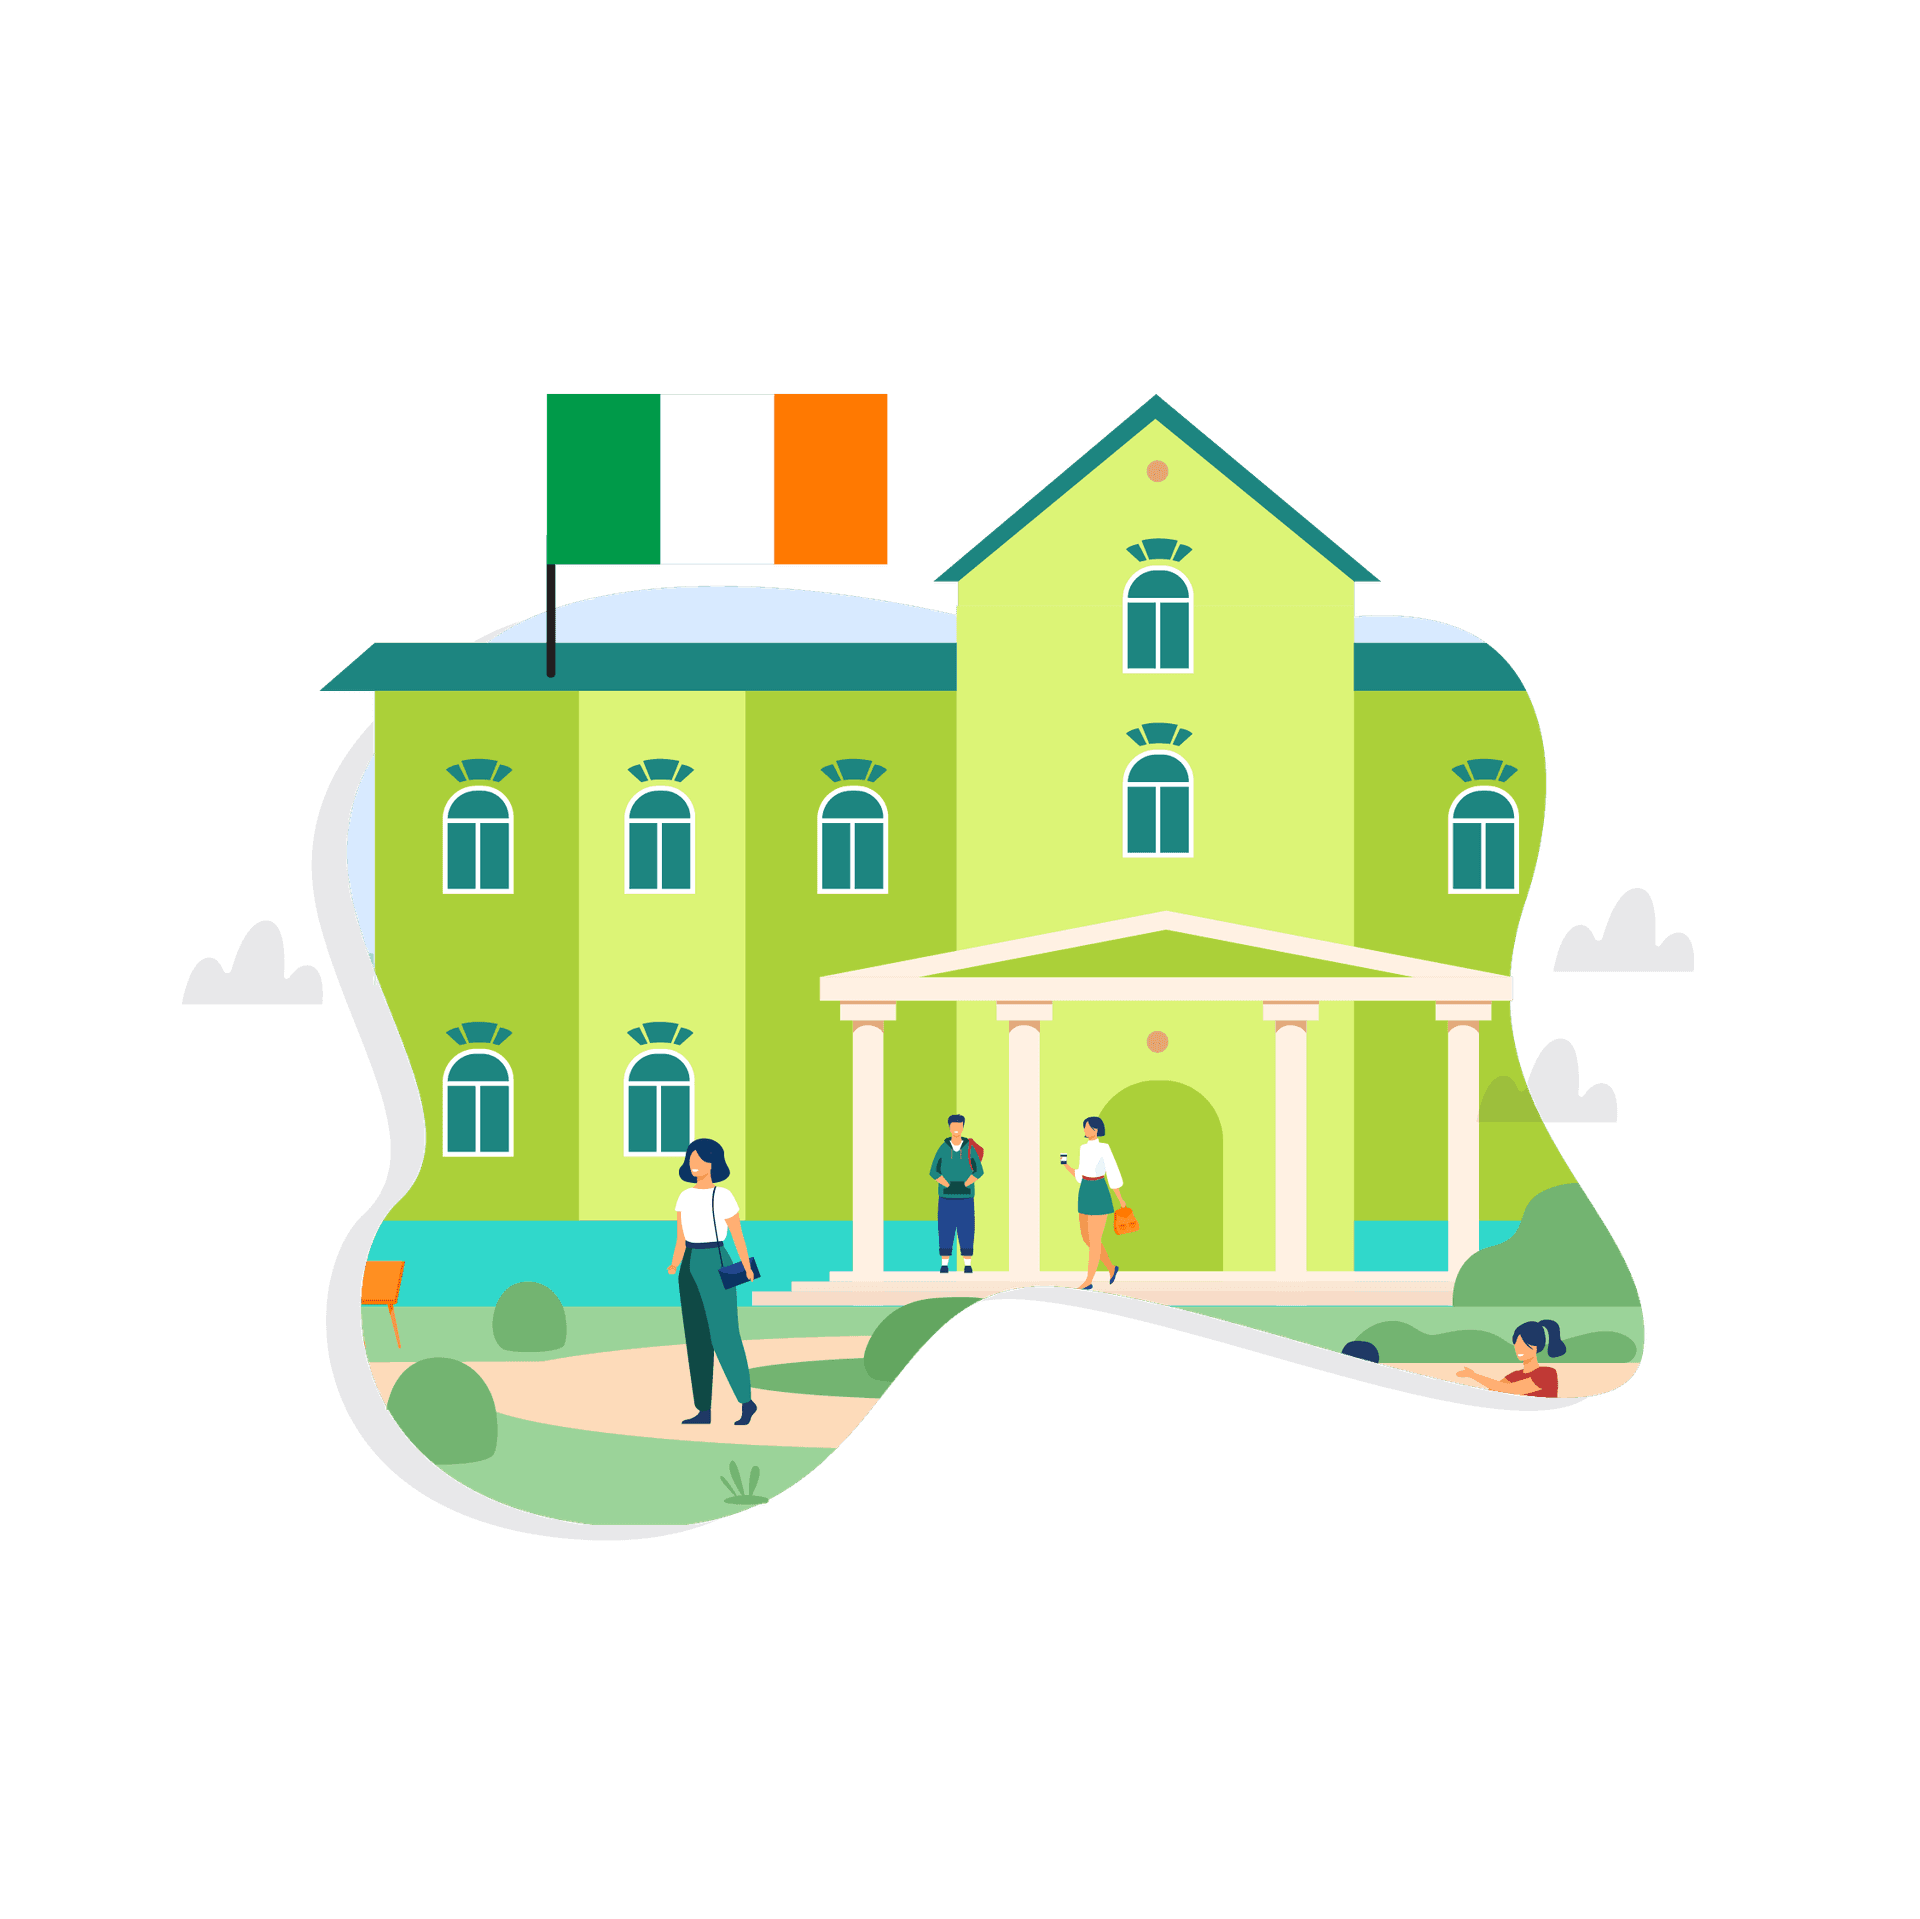 Why Study in Ireland